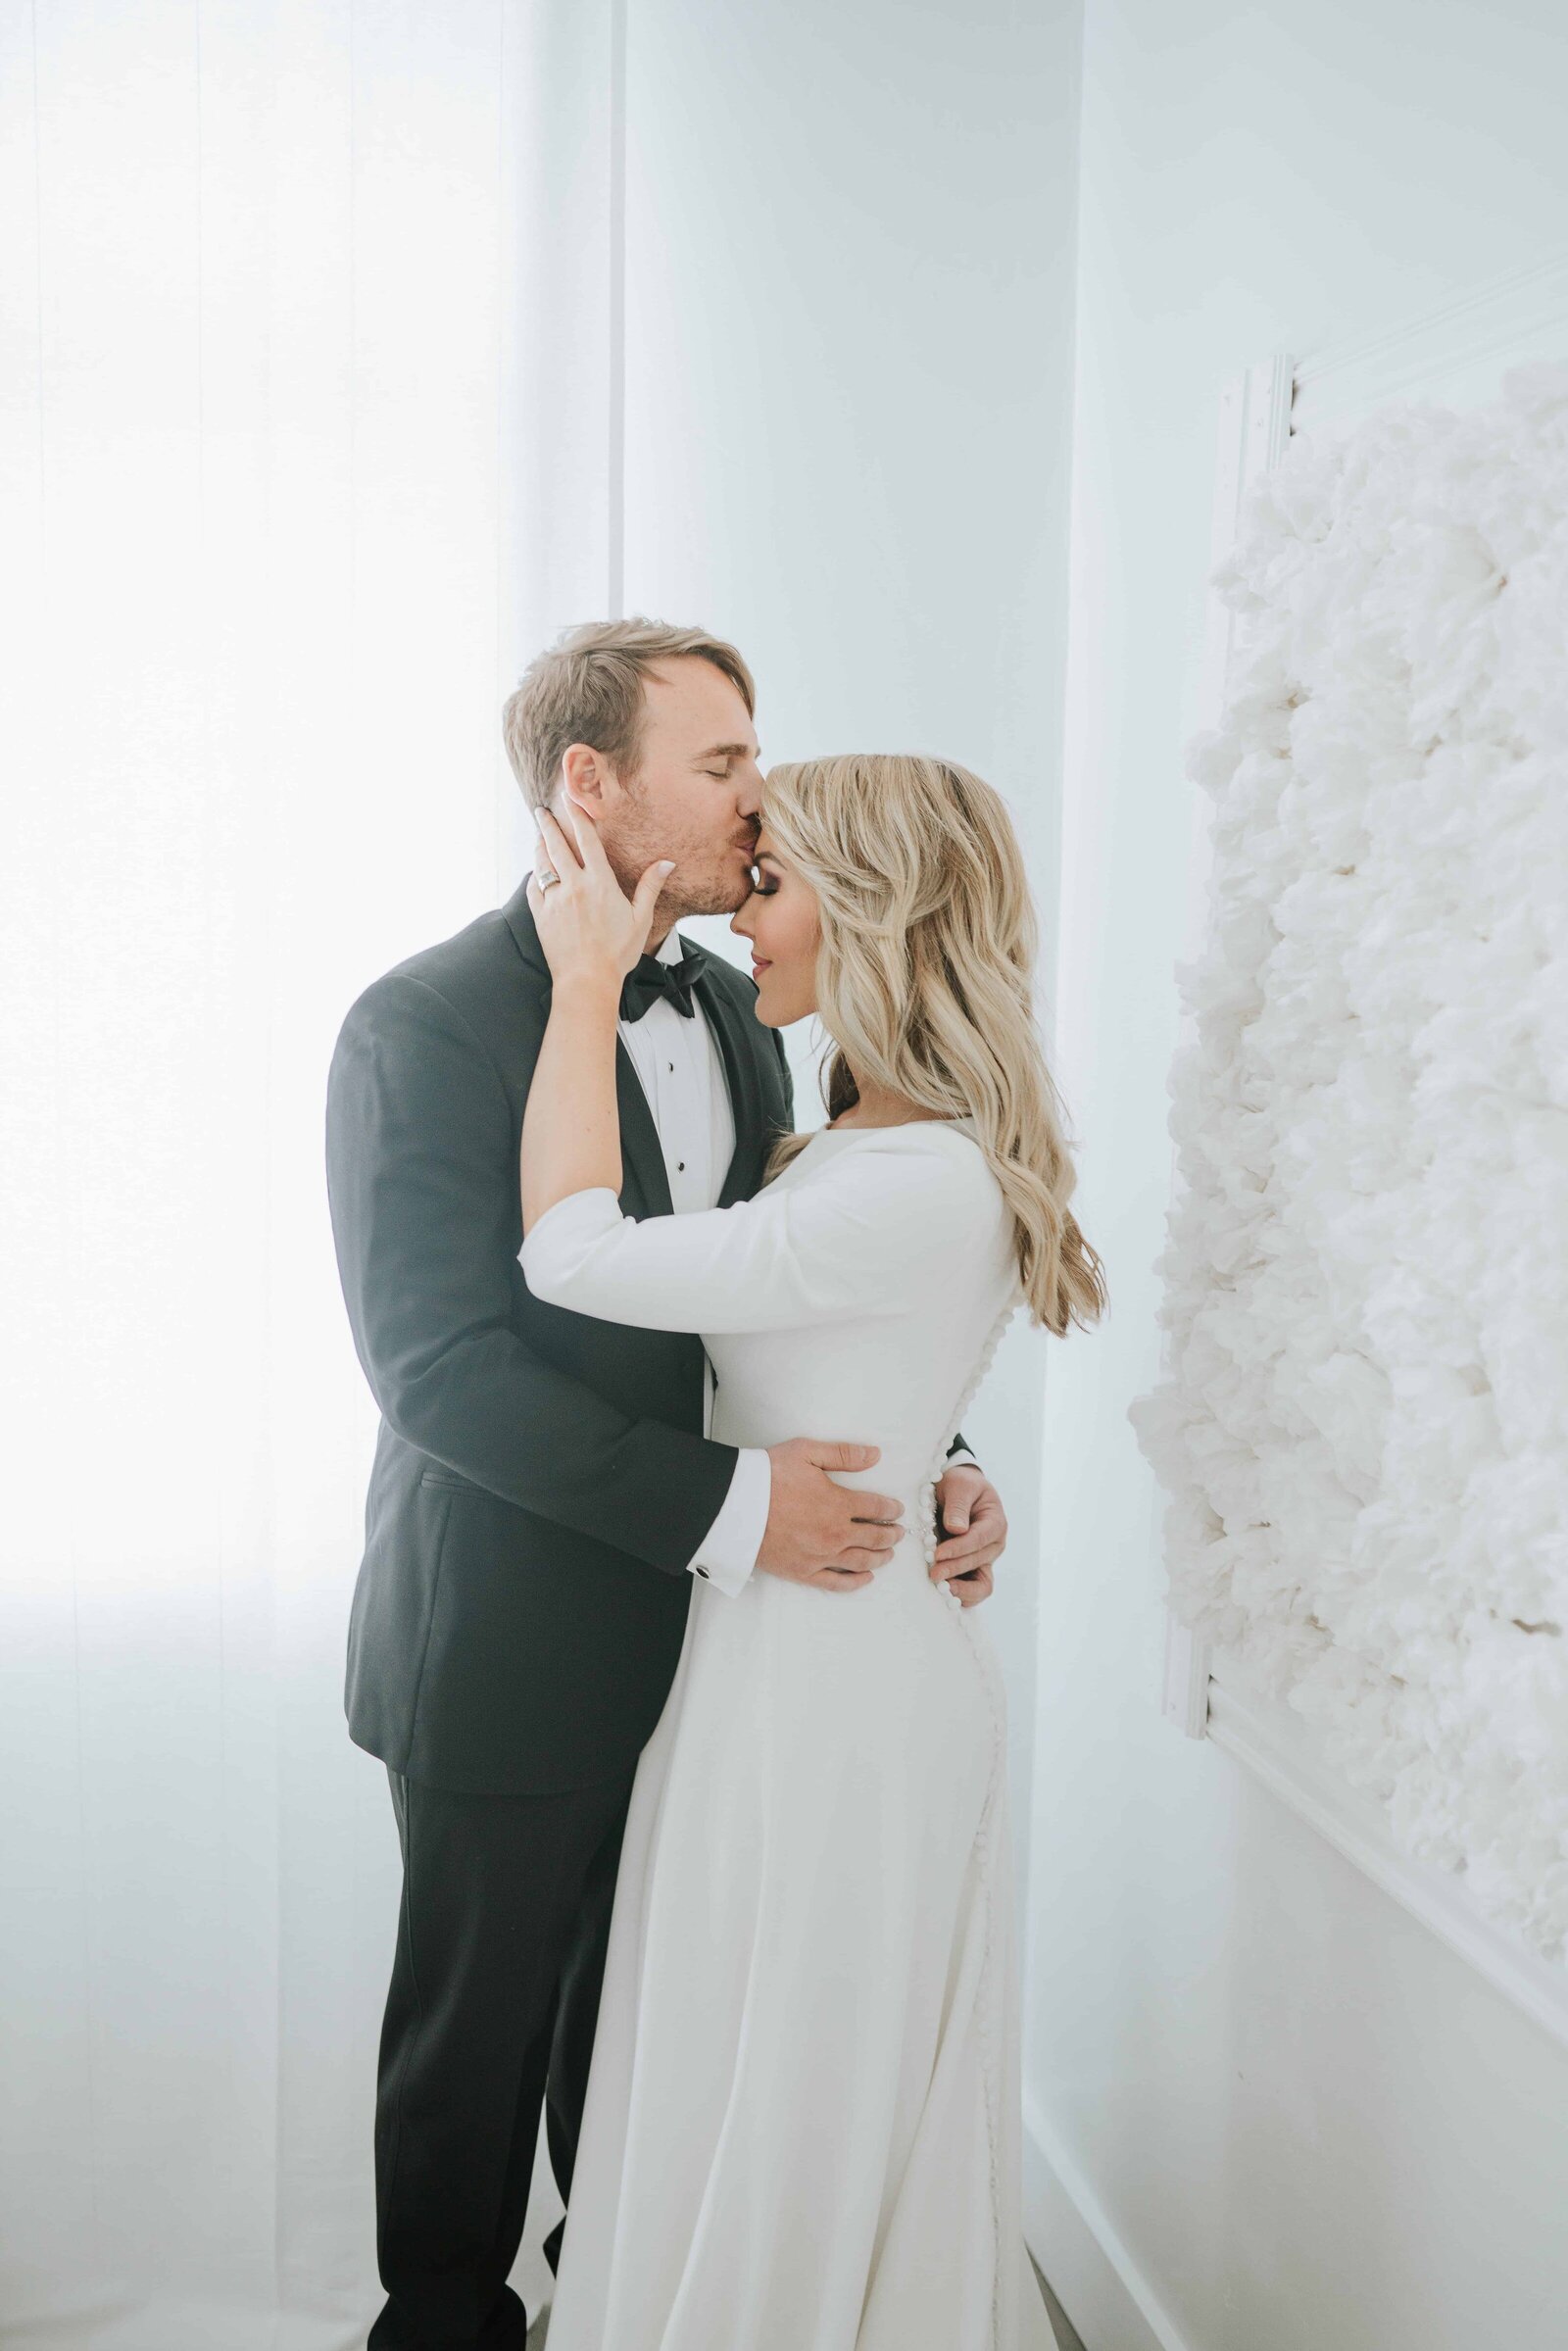 Lake Tahoe wedding photographer captures timeless bridal portraits